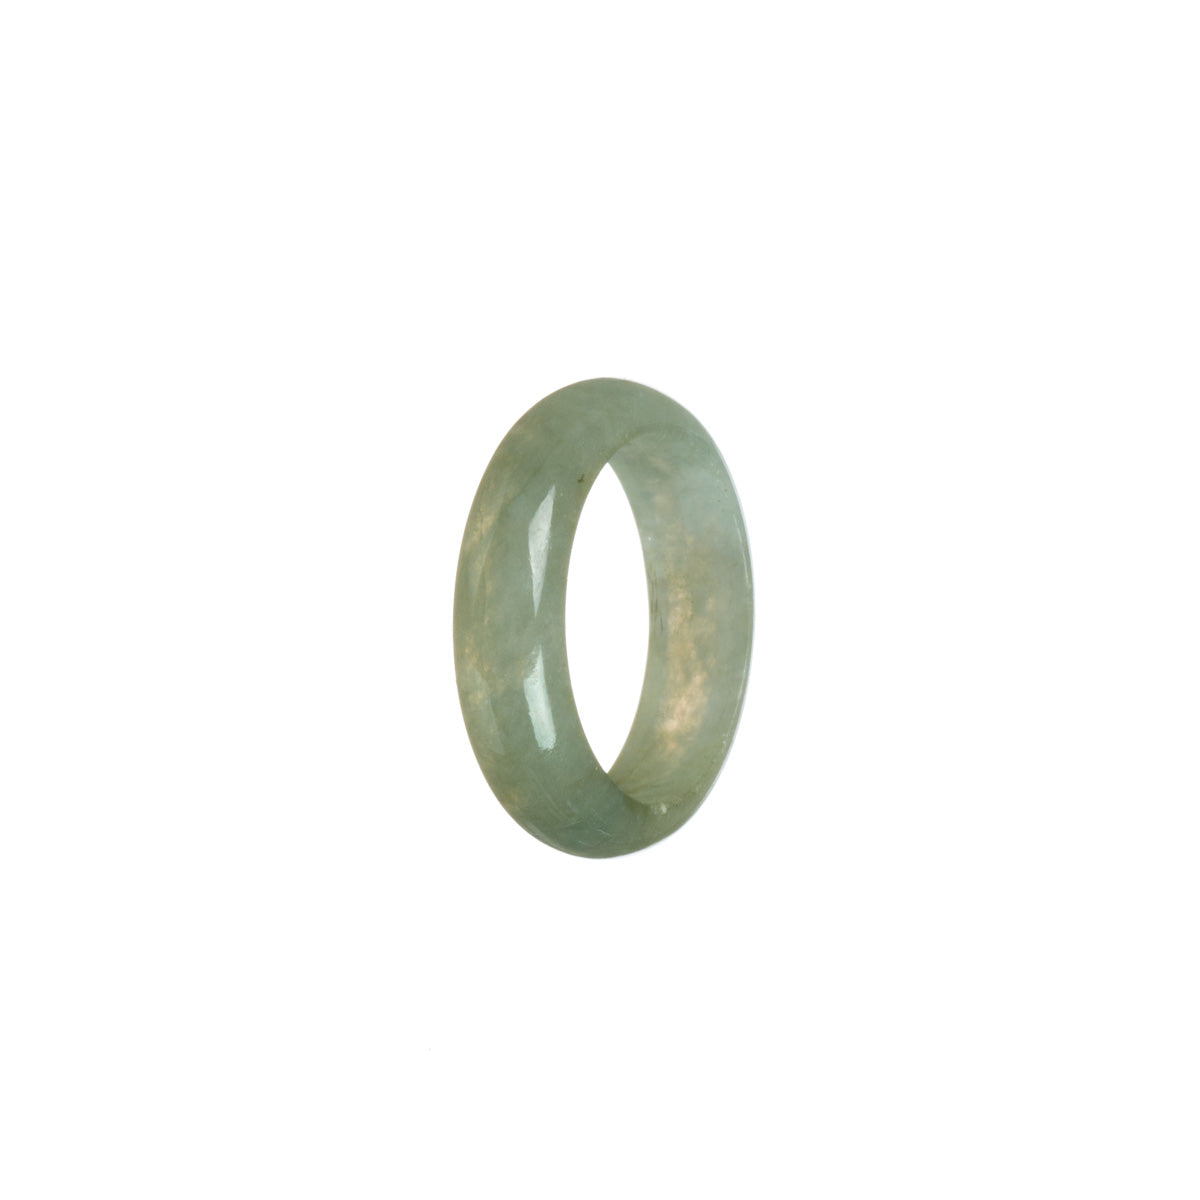 Genuine Greyish Green Burma Jade Band - Size S 1/2